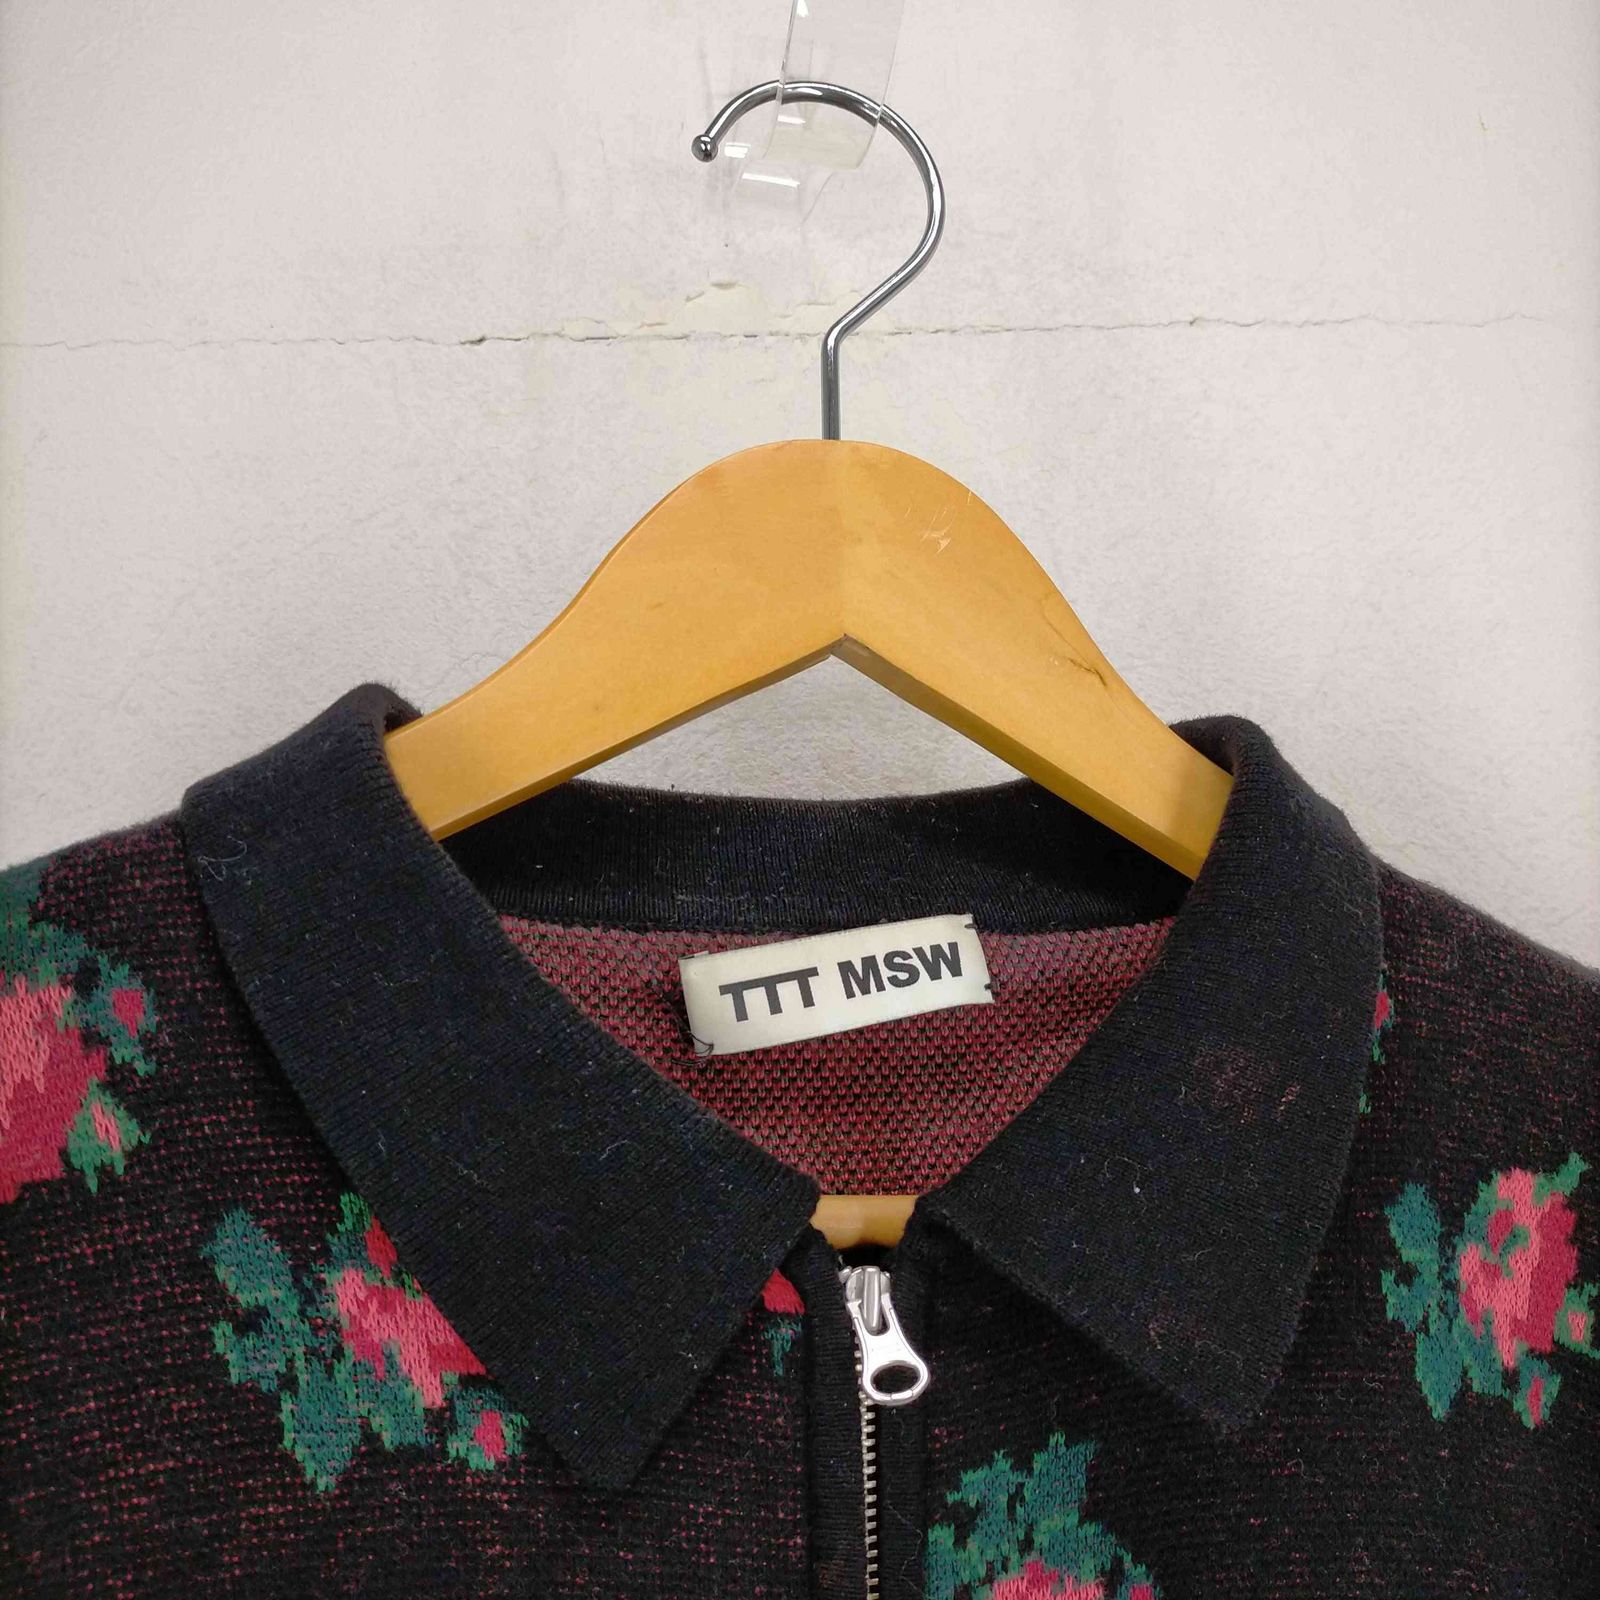 TTT_MSW flower knit polo 20AWアッパーハイツ⠀